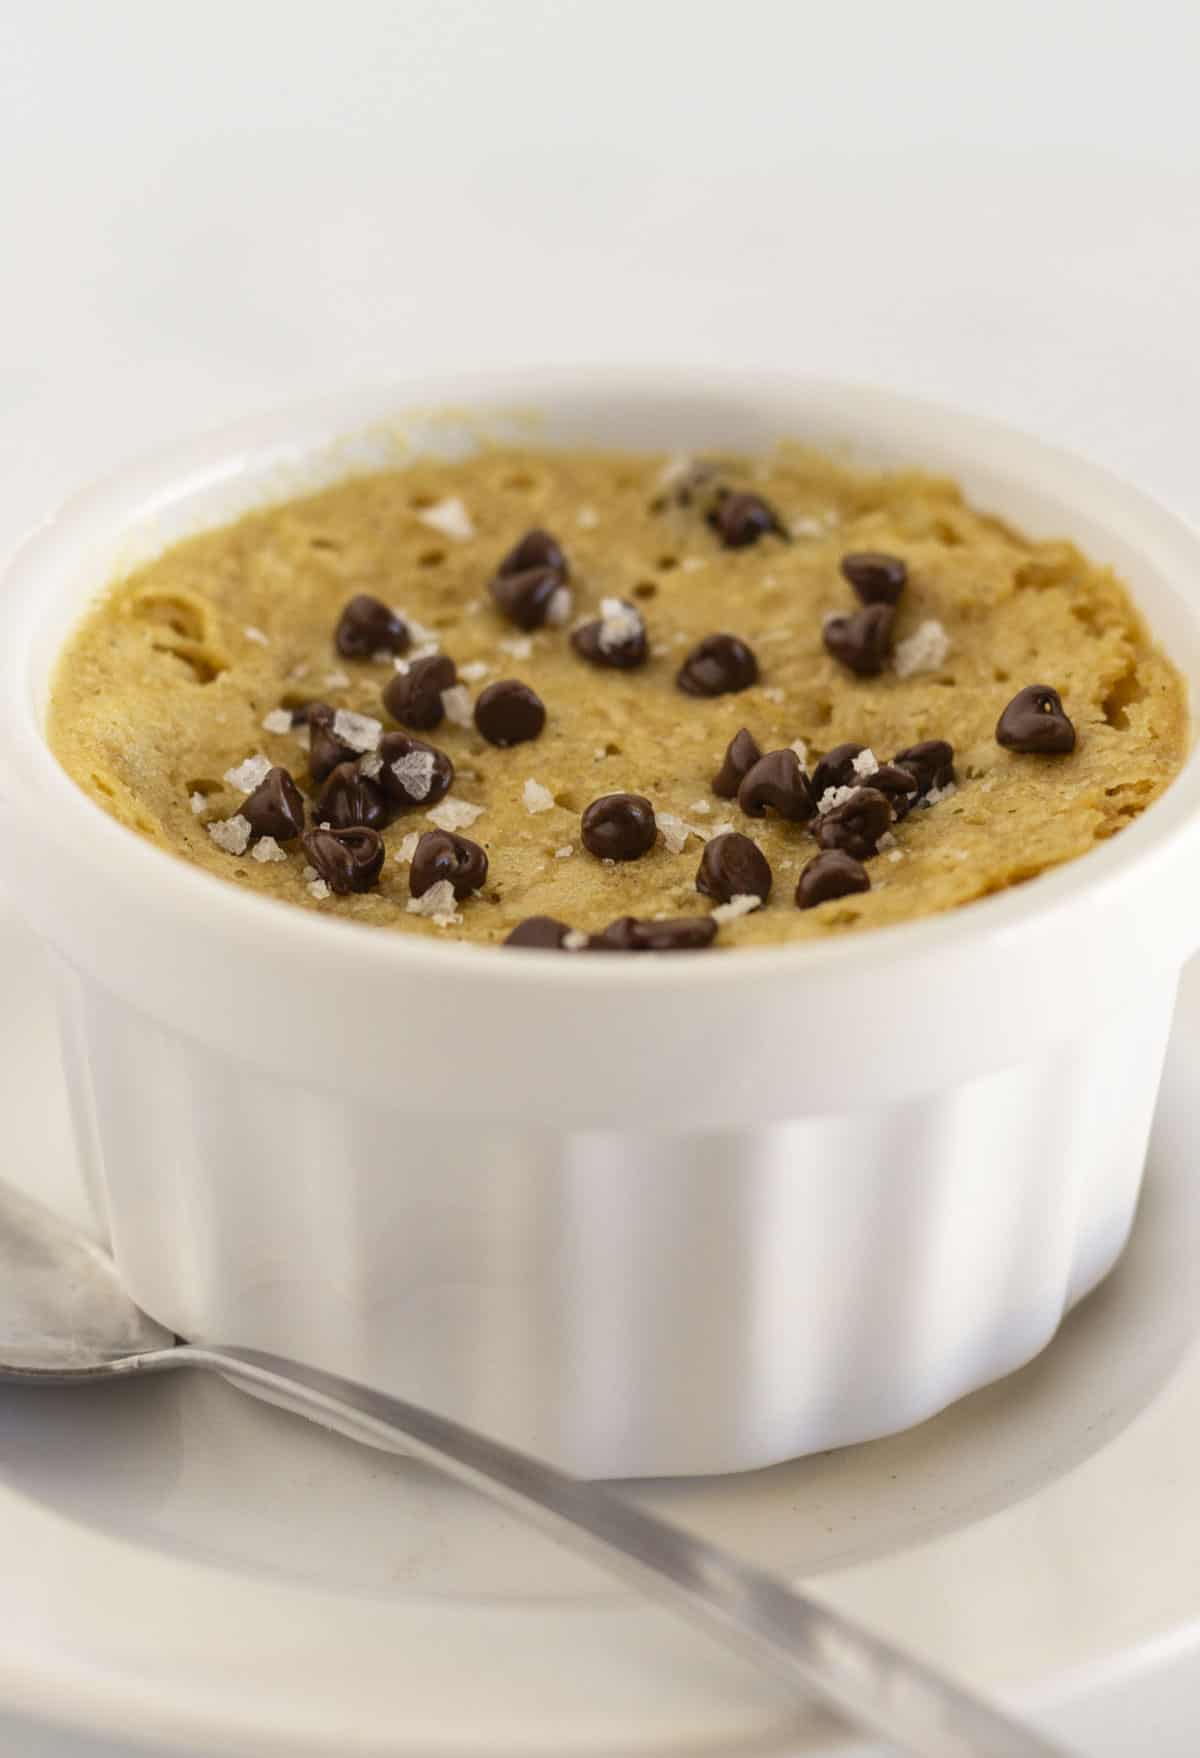 A single serve microwave chocolate chip cookie with flaky sea salt and a spoon.